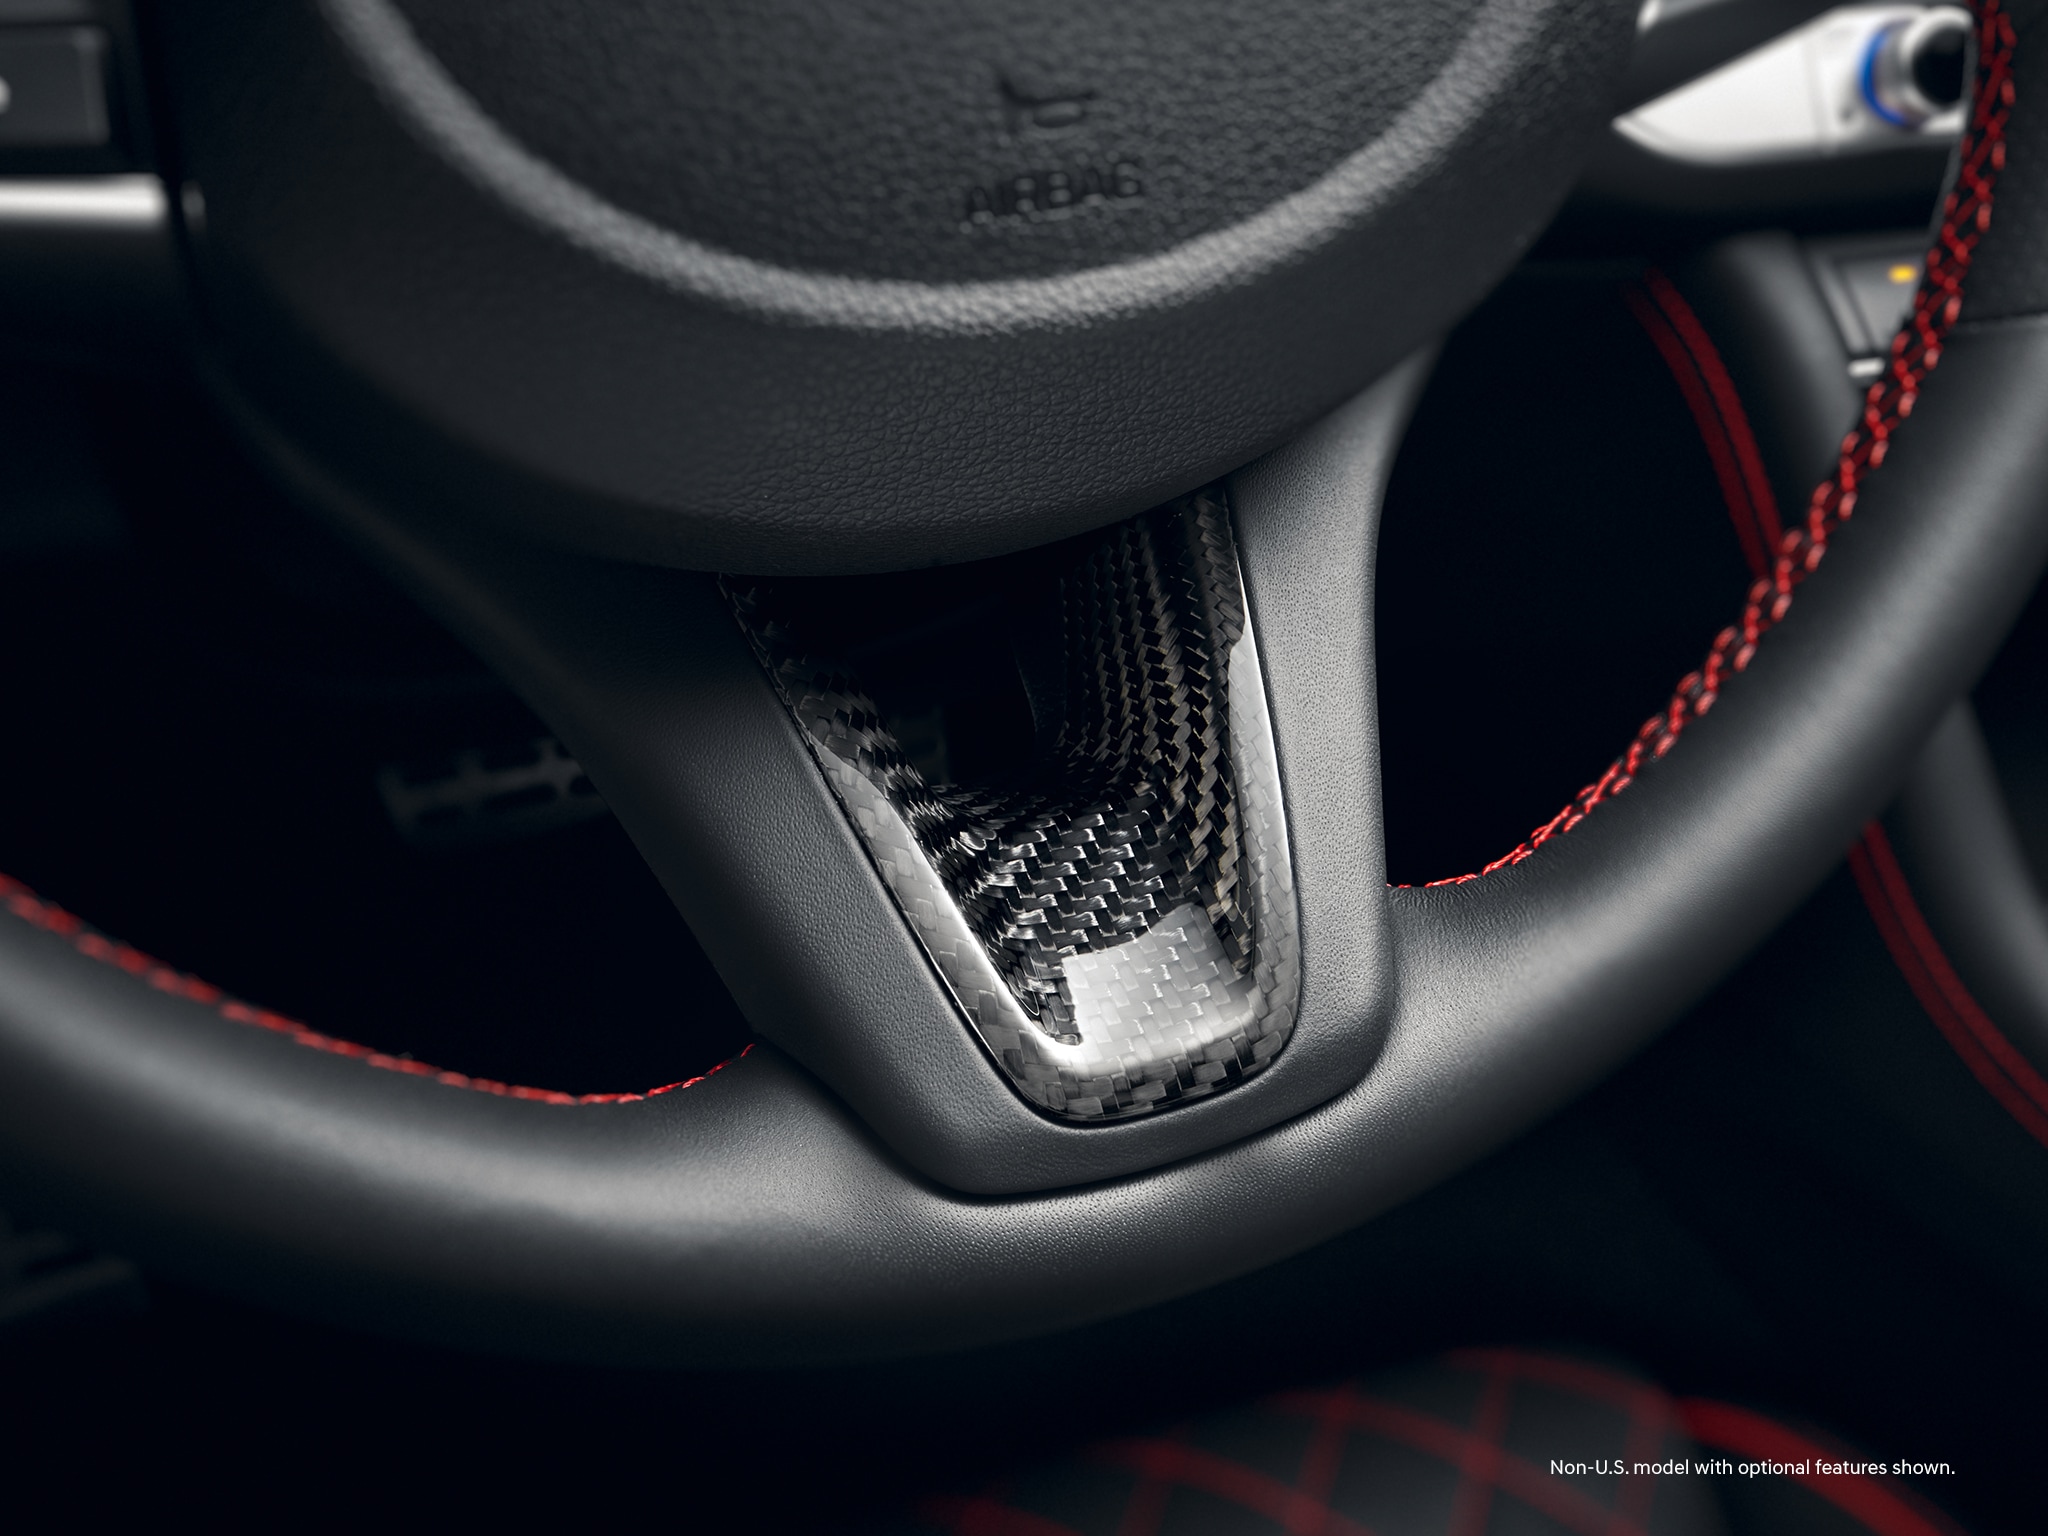 2022 Genesis G70’s available three-spoke sport steering wheel with carbon fiber trim.